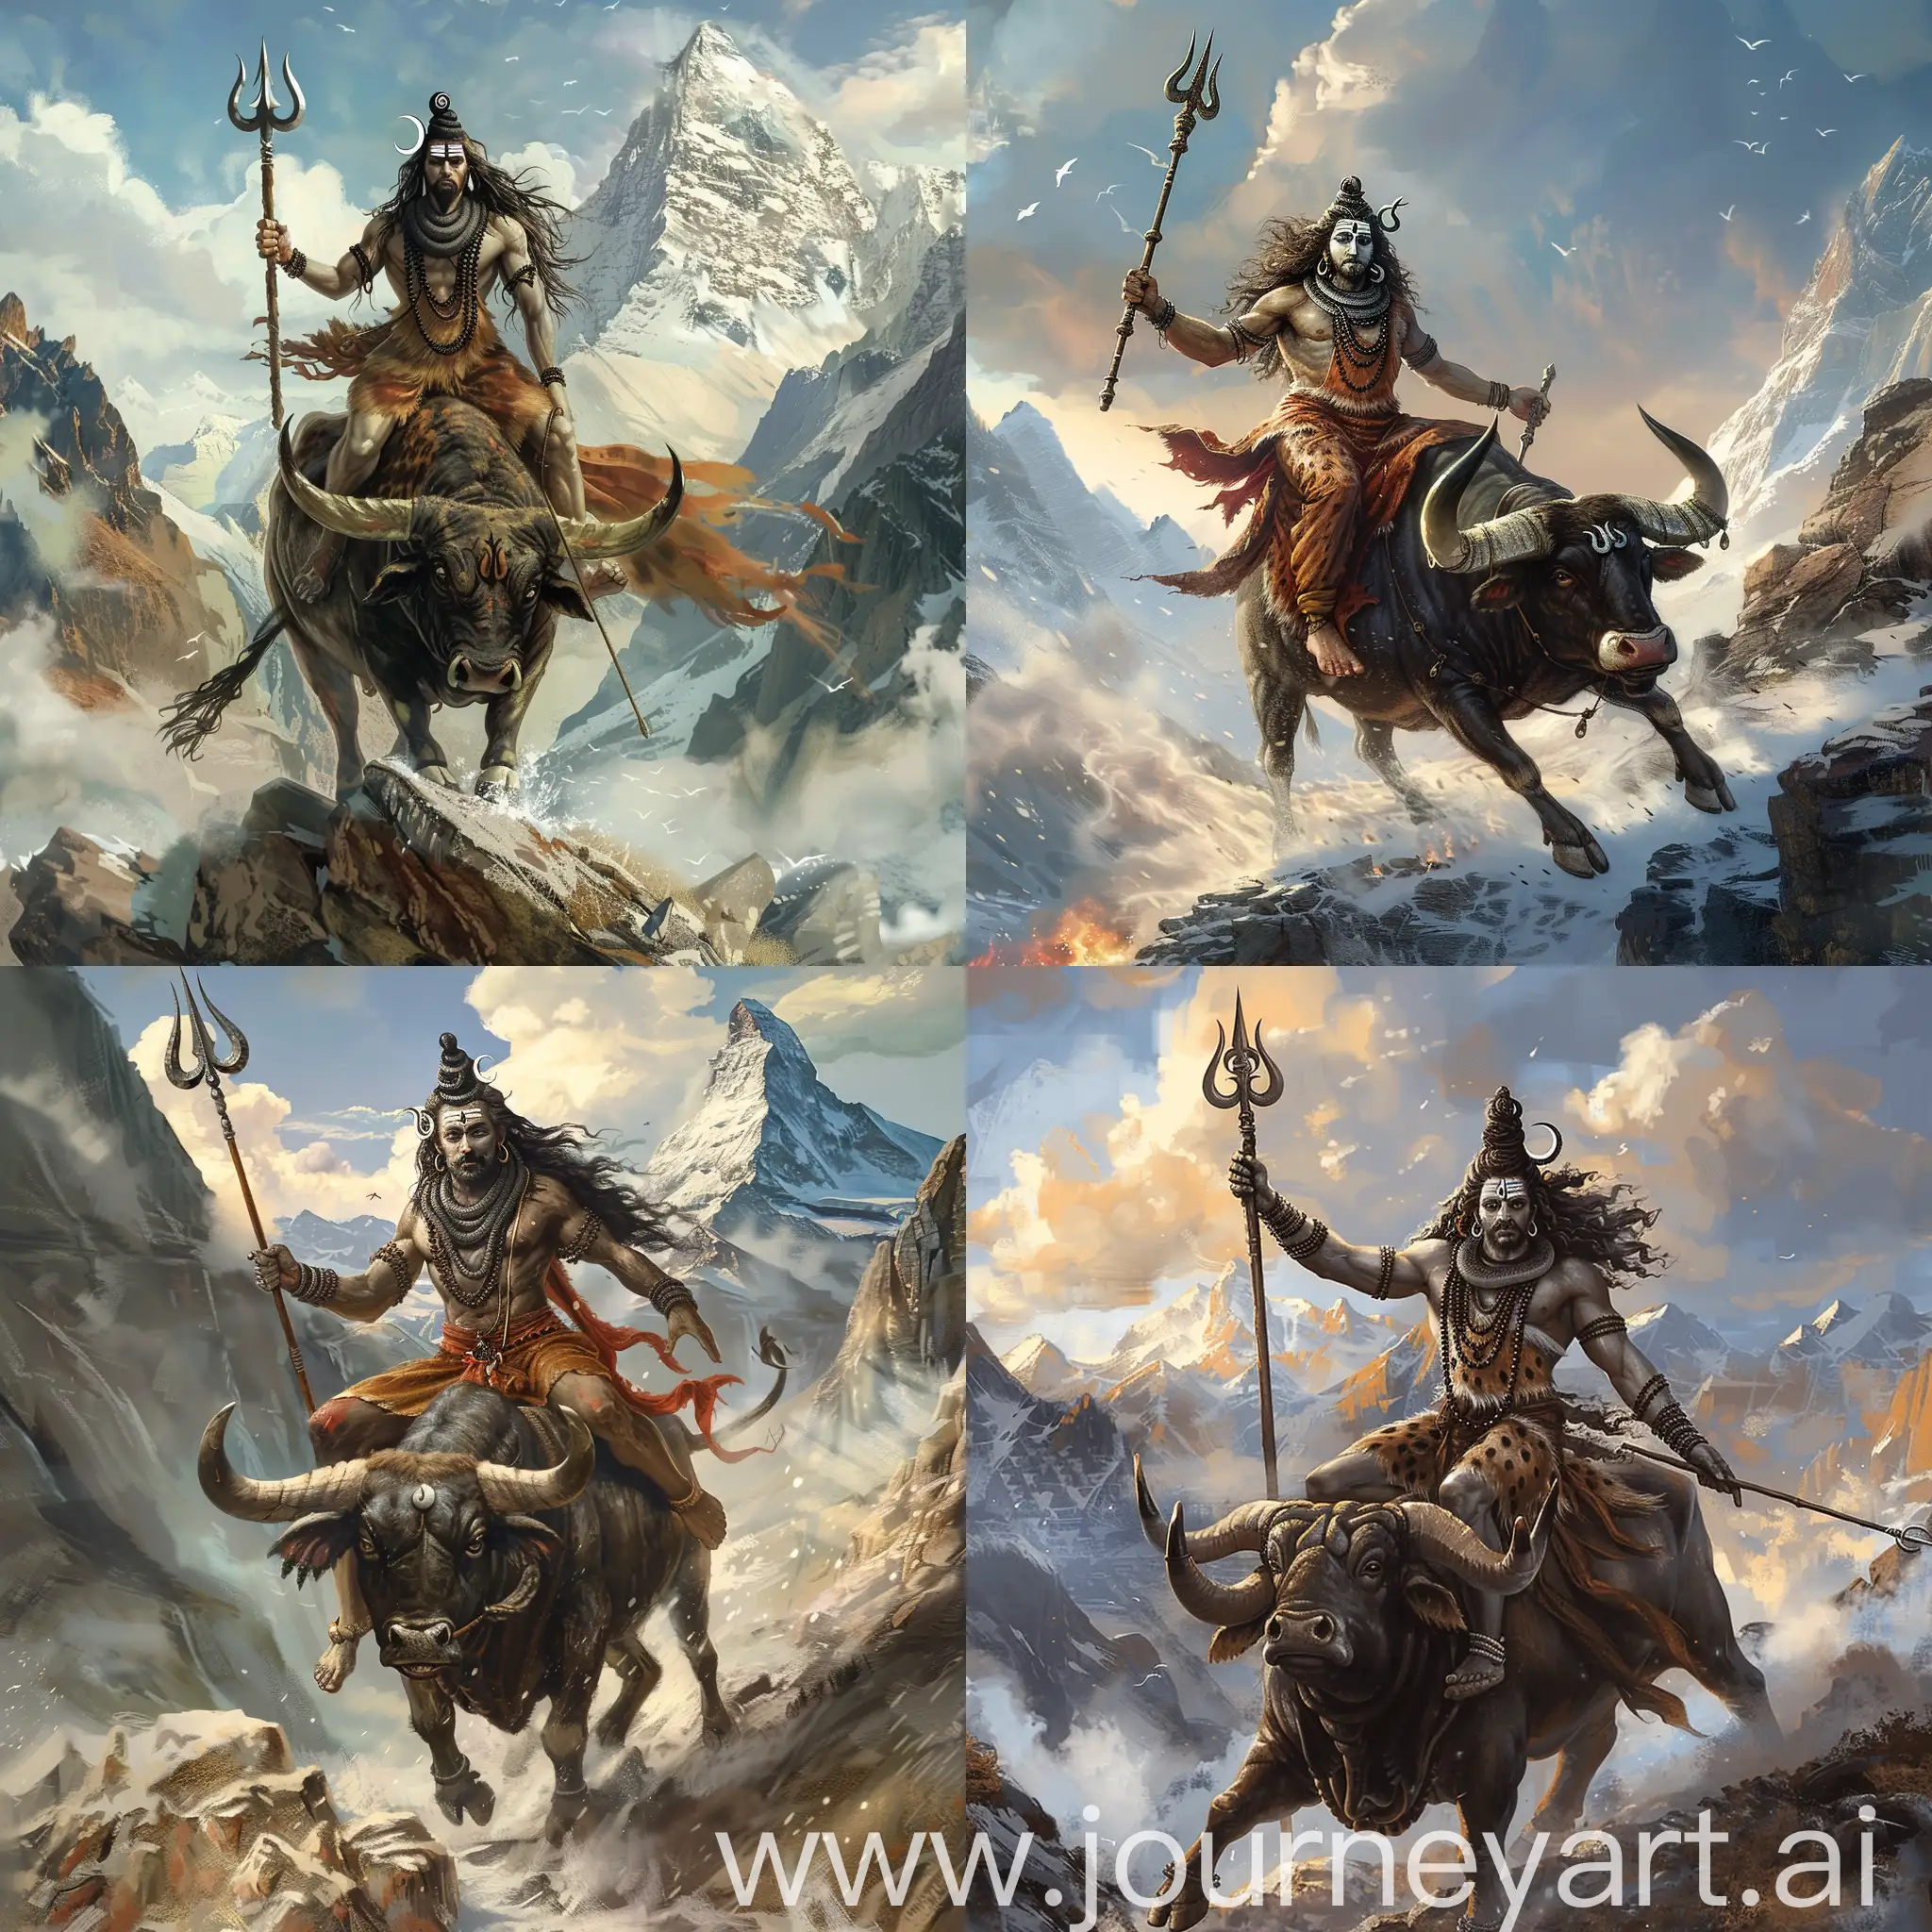 Fierce-Lord-Shiva-Riding-Bull-Divine-Power-in-Mountainous-Majesty